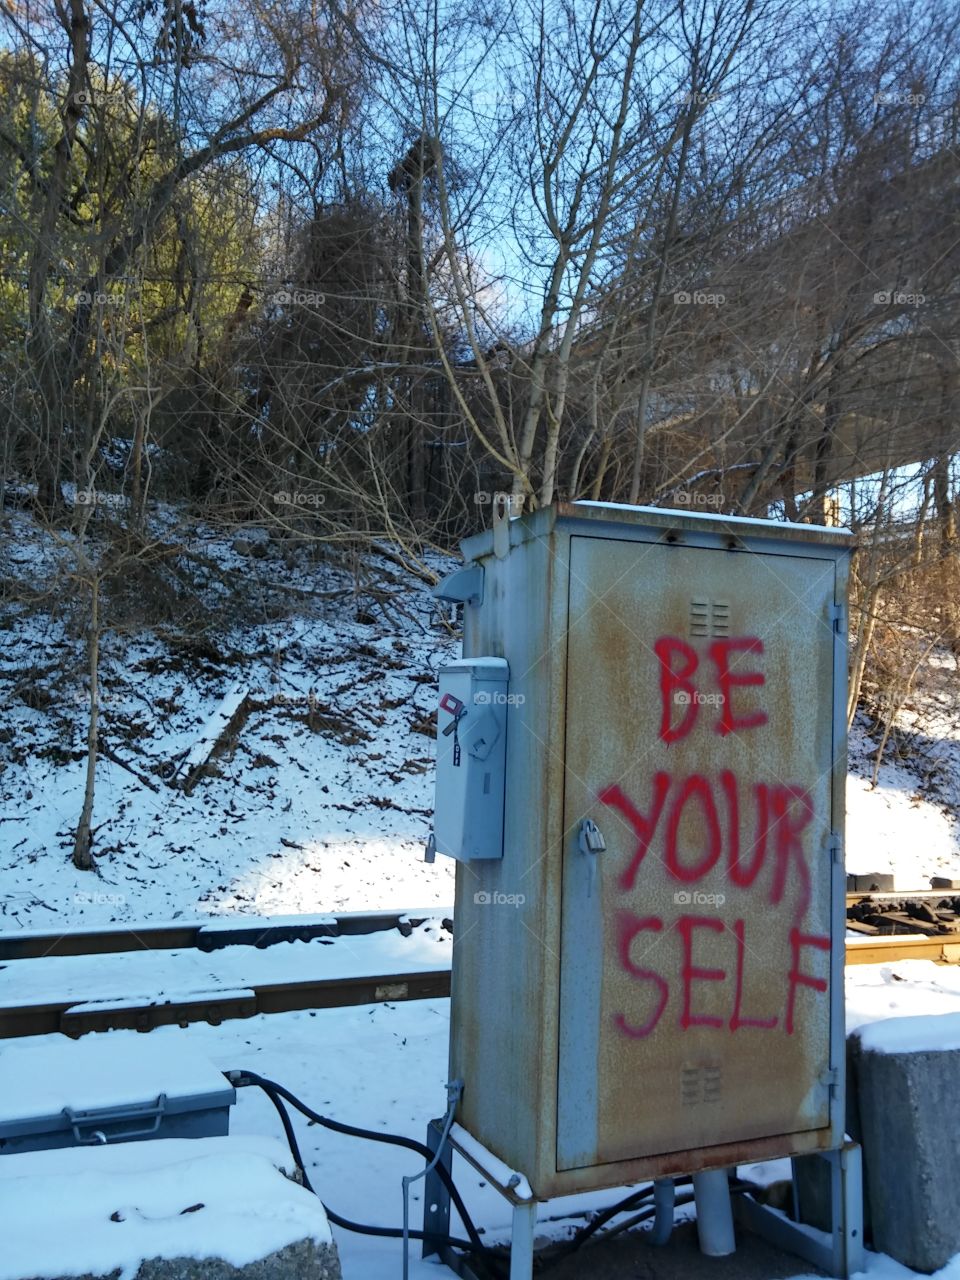 Inspirational graffiti sprayed on a switchbox aside train tracks, wintertime [original photo].